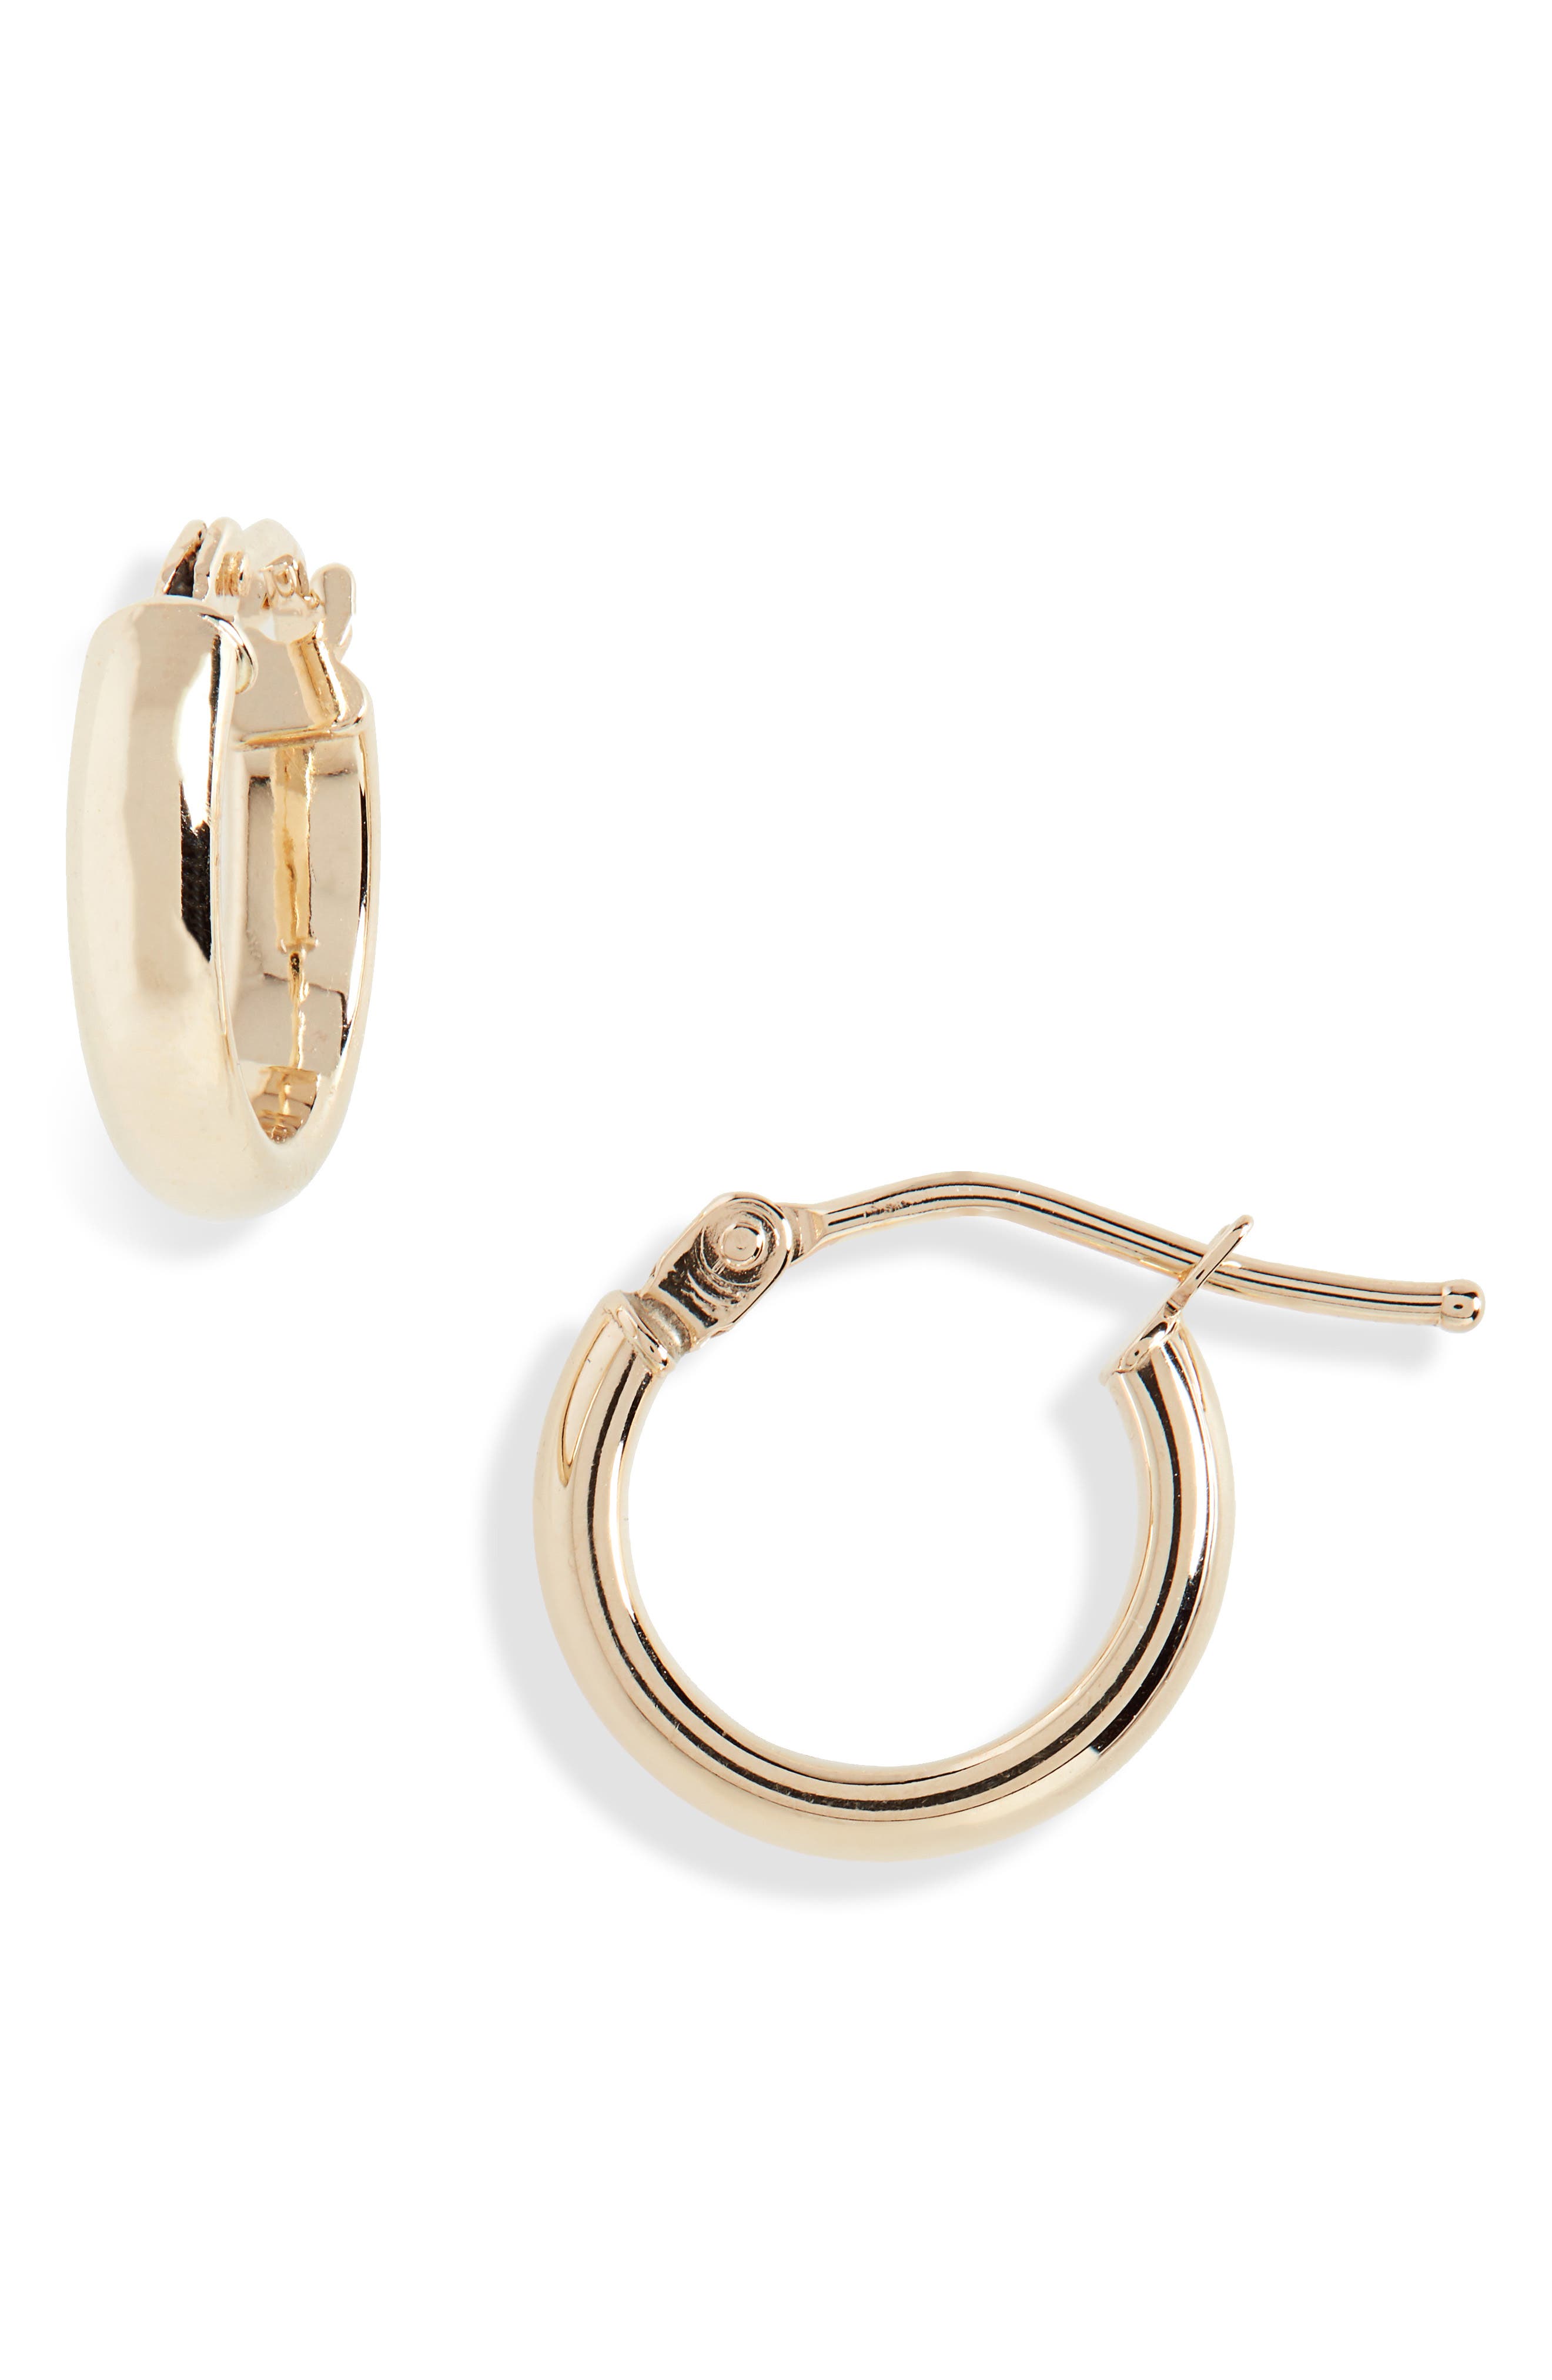 Zephyrr Fashion Gold Tone Floral Hook Dangler Earrings with Pompoms For Girls 